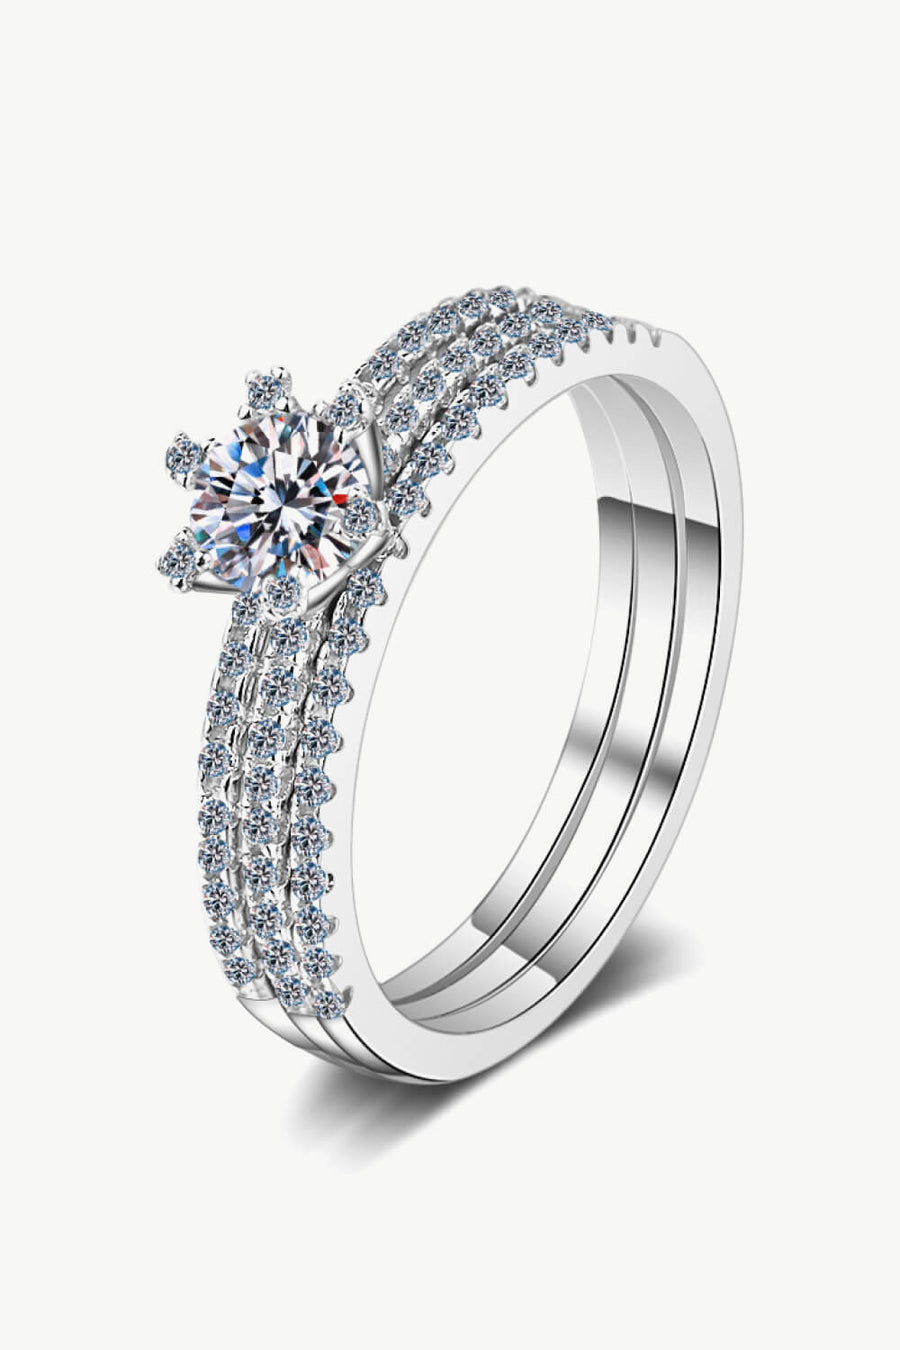 Best Diamond Ring Jewelry Gifts for Women | 1 Carat Round Diamond Ring | MASON New York